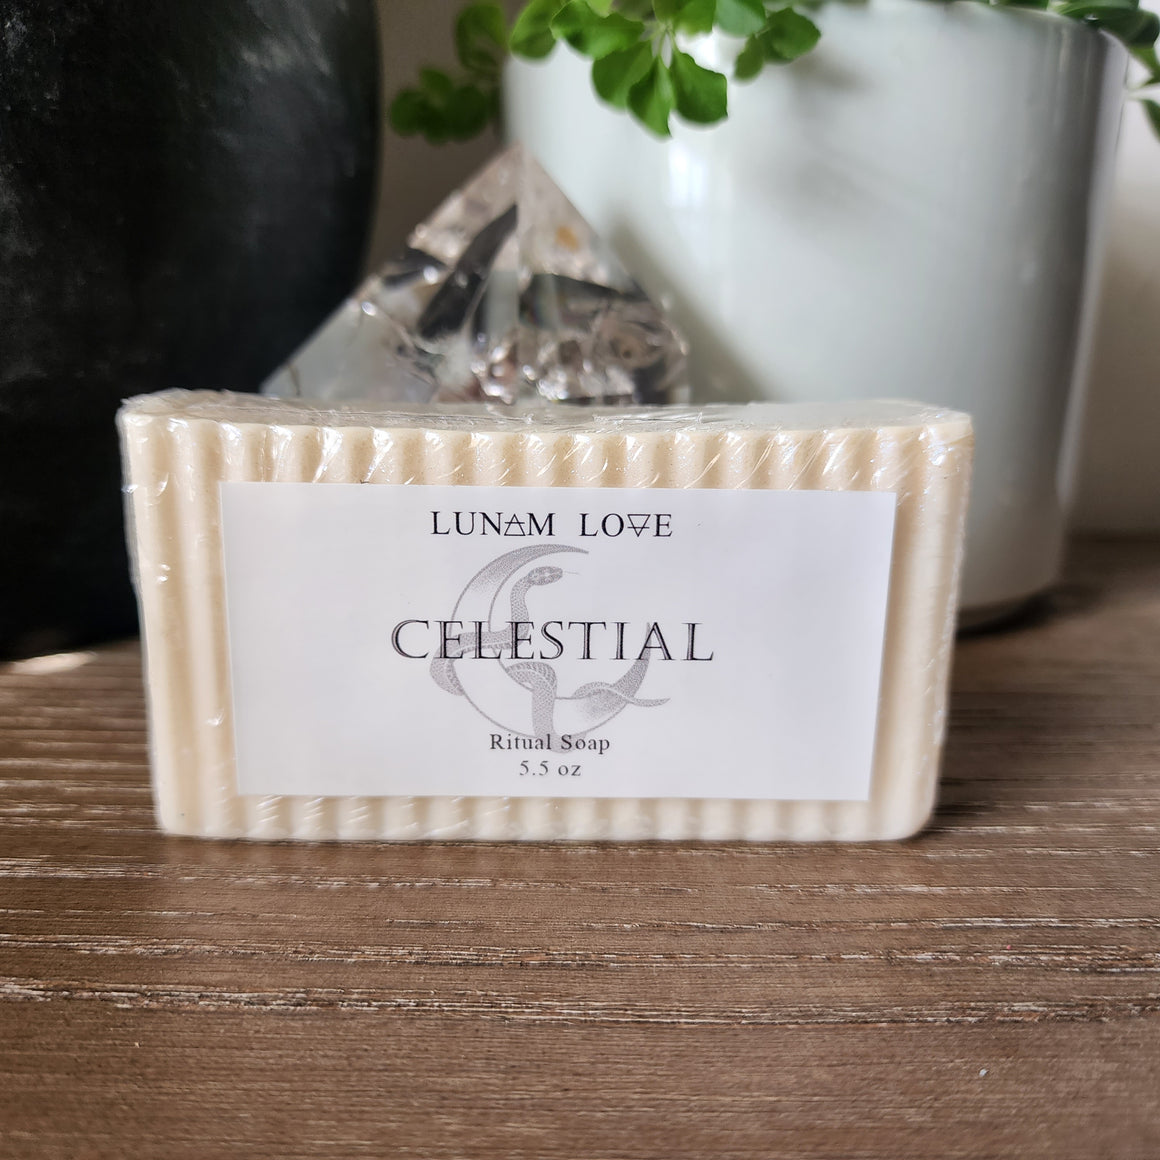 Celestial Ritual Soap